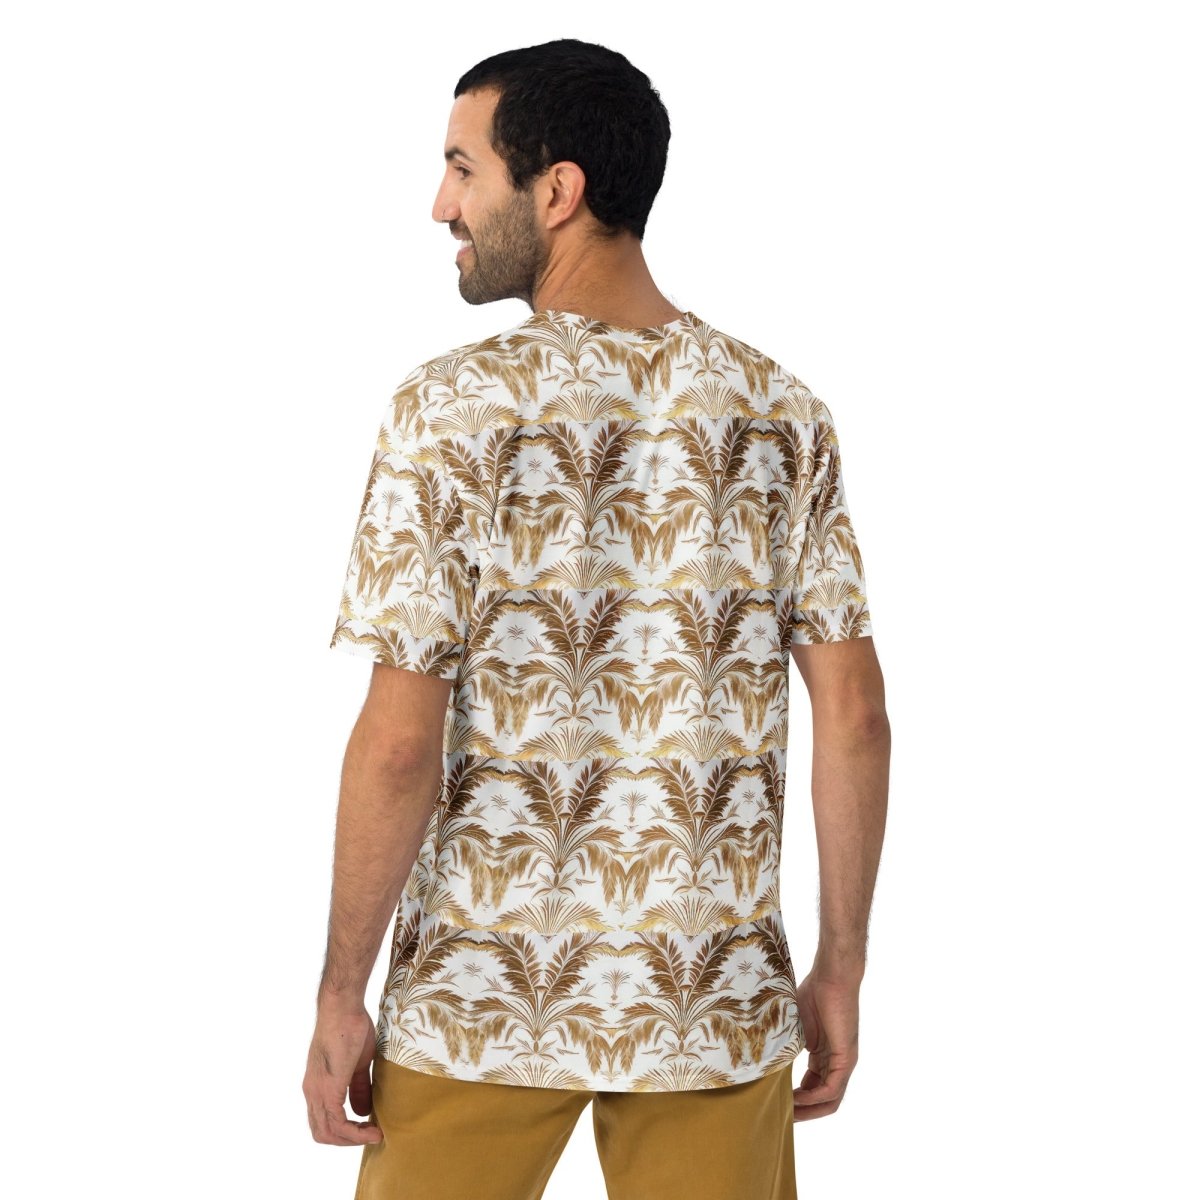 Sefira Summer Festival Men's t-shirt | Sefira Beach Collection Man - Sefira Collections